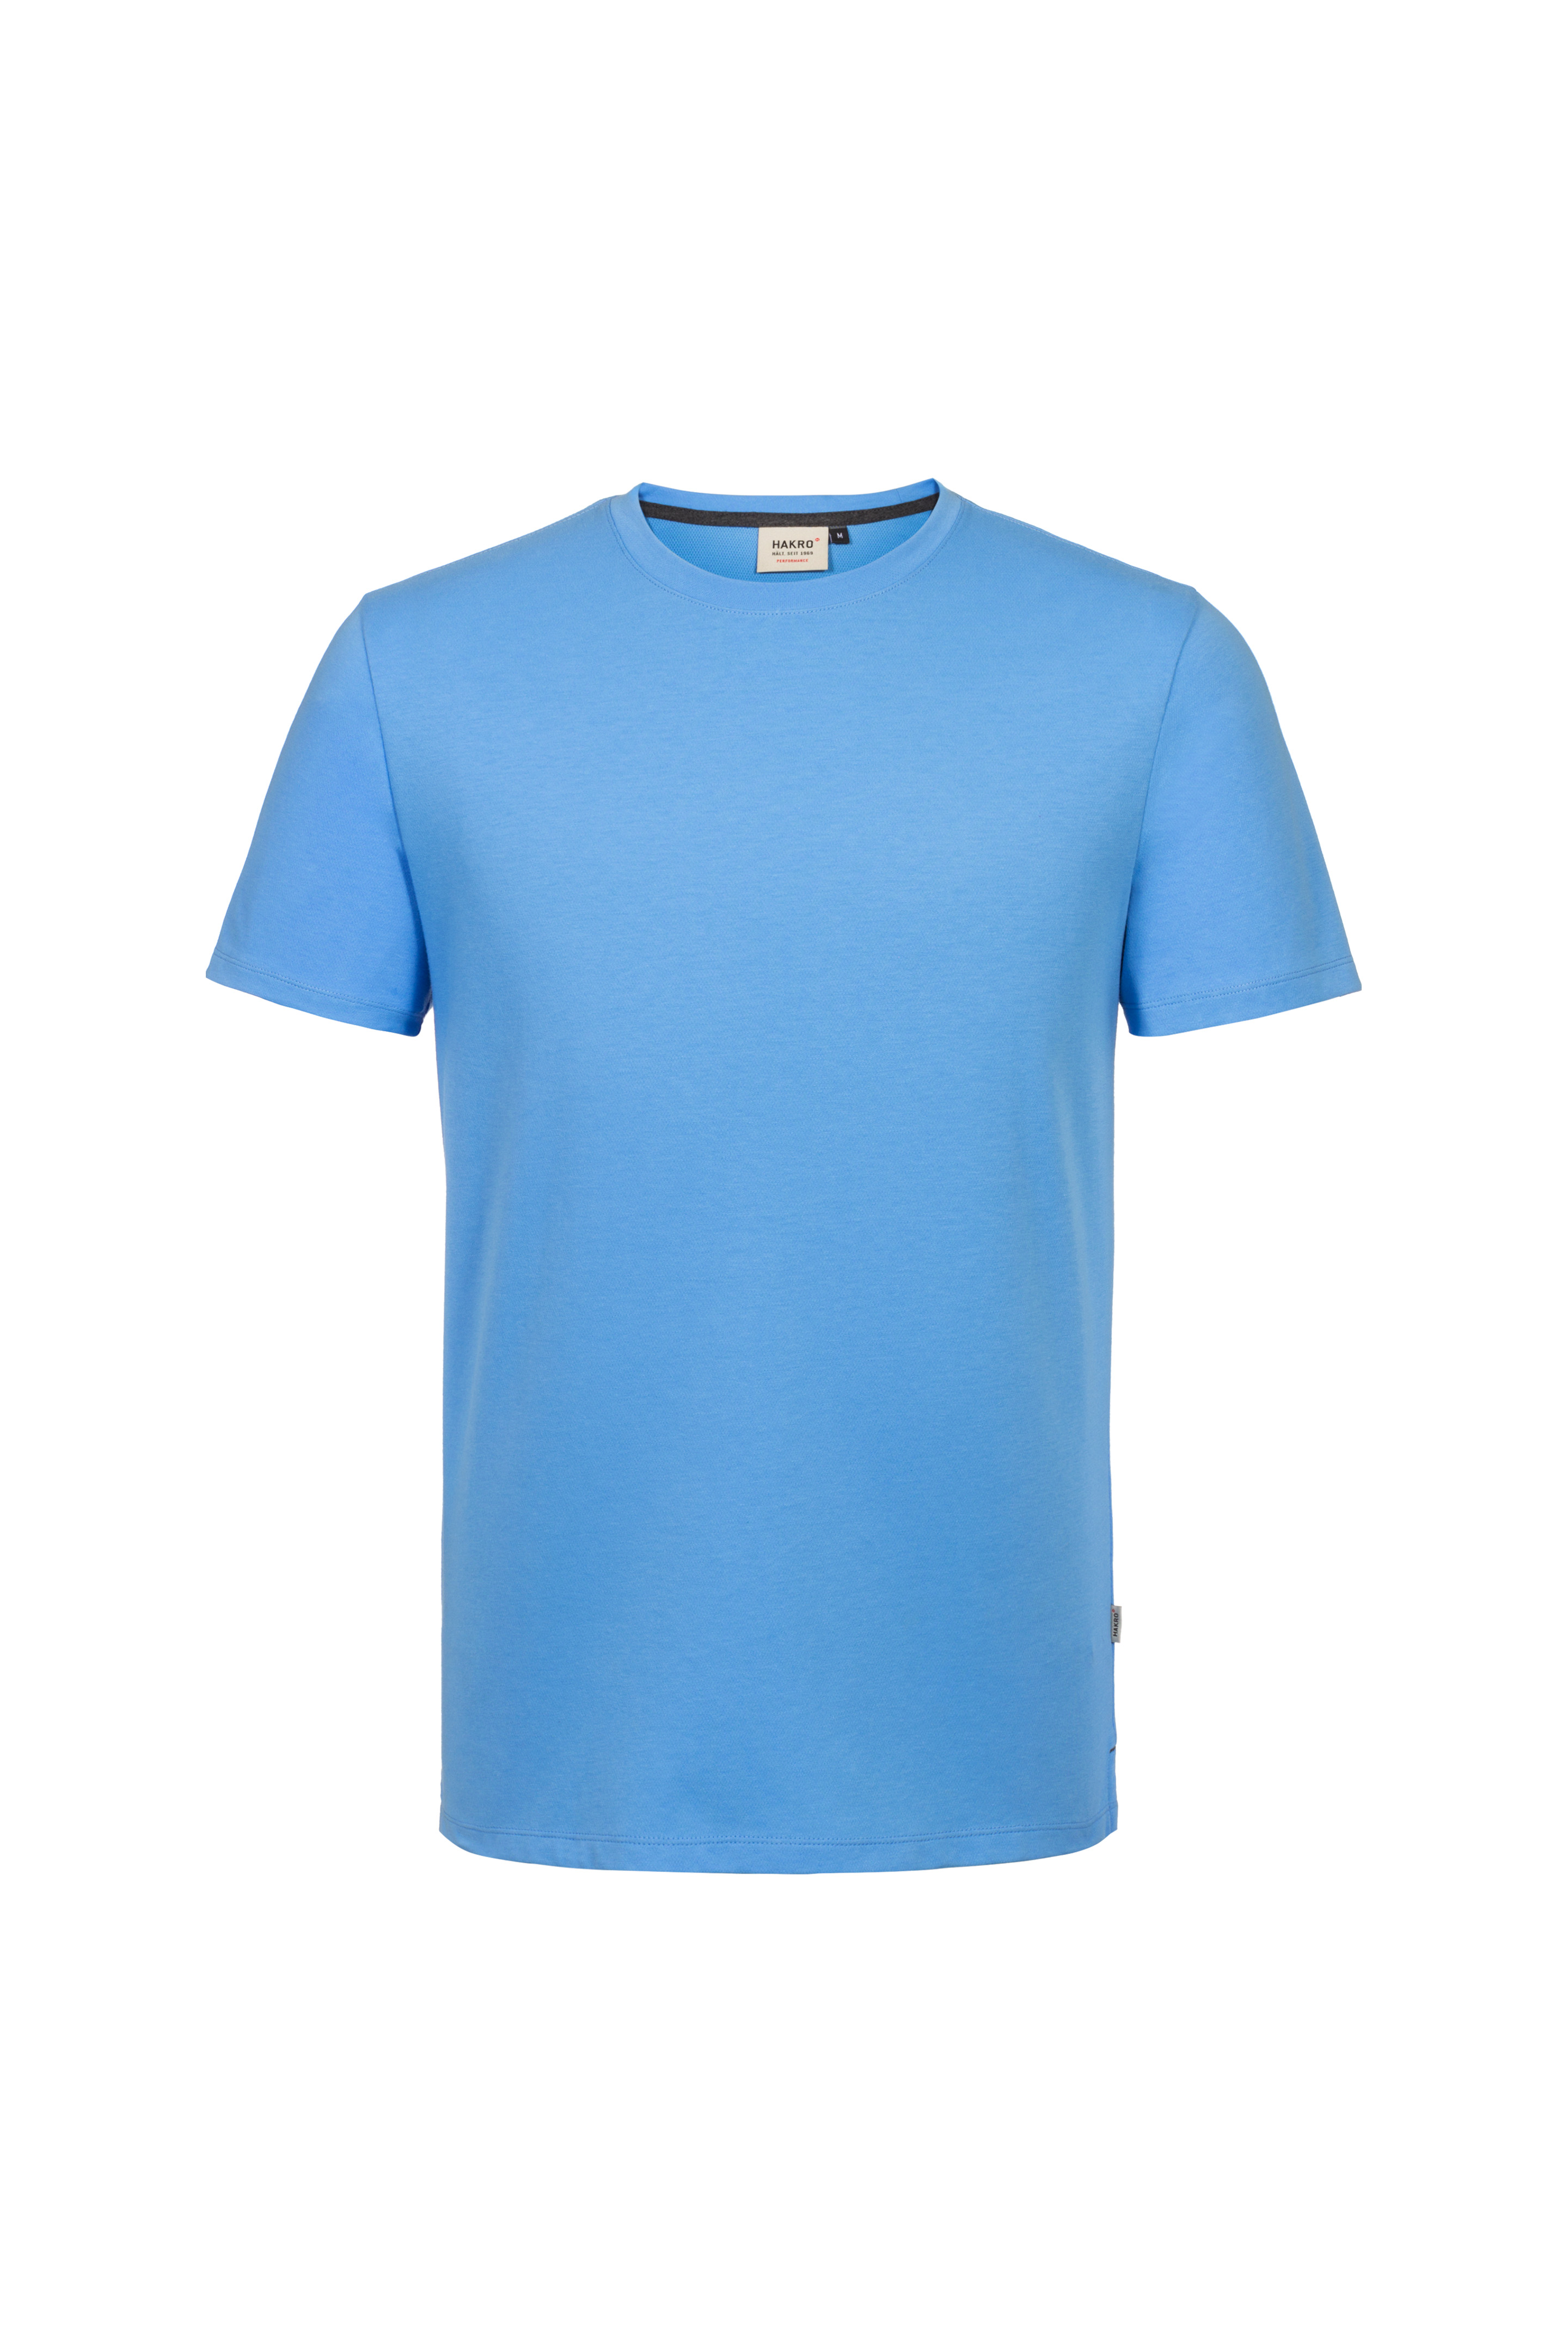 T-Shirt Cotton-Tec 269